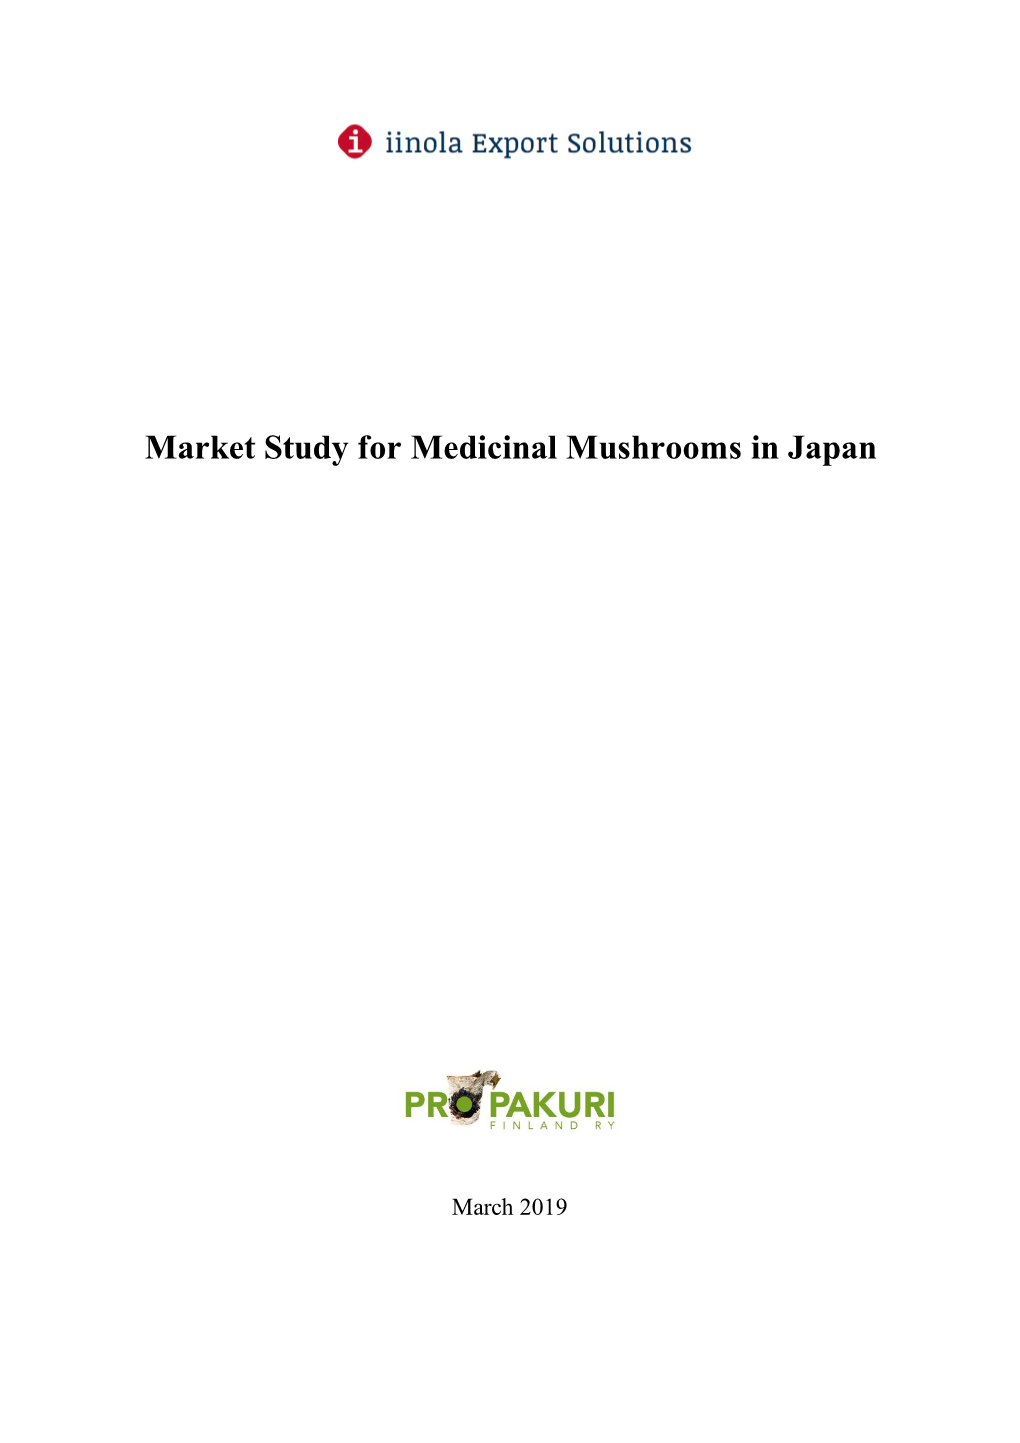 Market Study for Medicinal Mushrooms in Japan